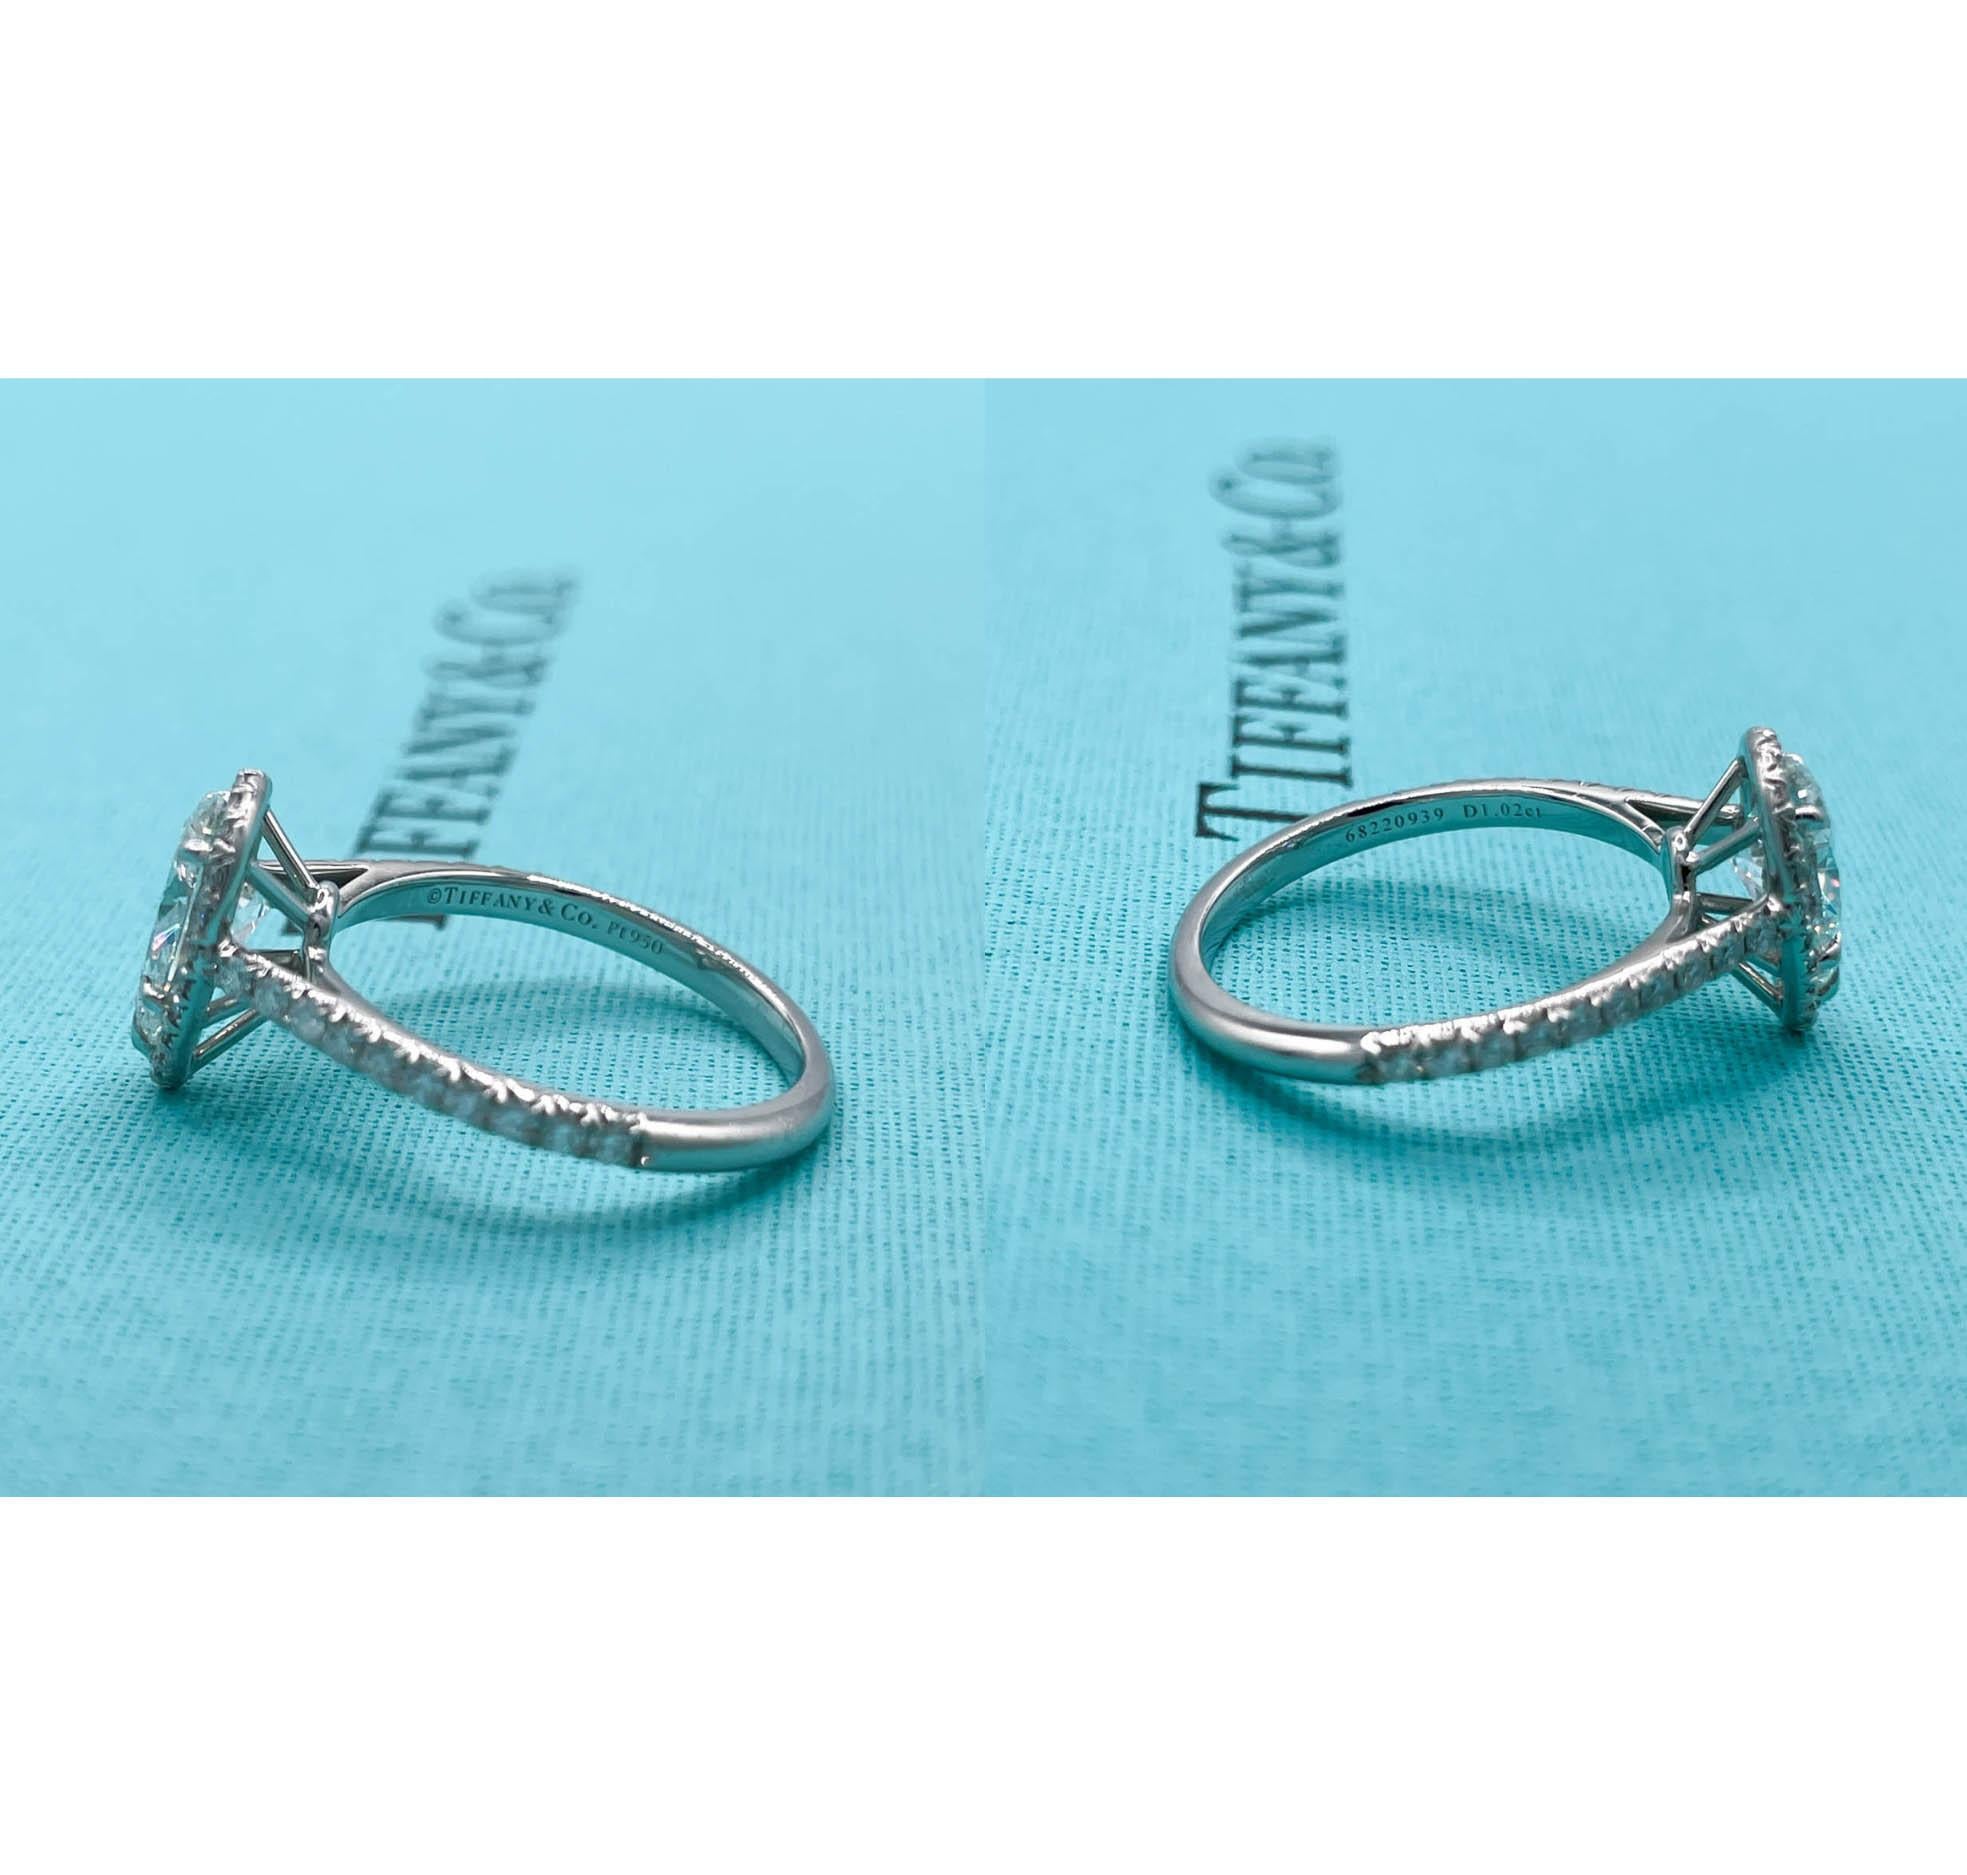 Tiffany & Co 1.02 Carat Pear Diamond Halo Platinum Engagement Ring 9